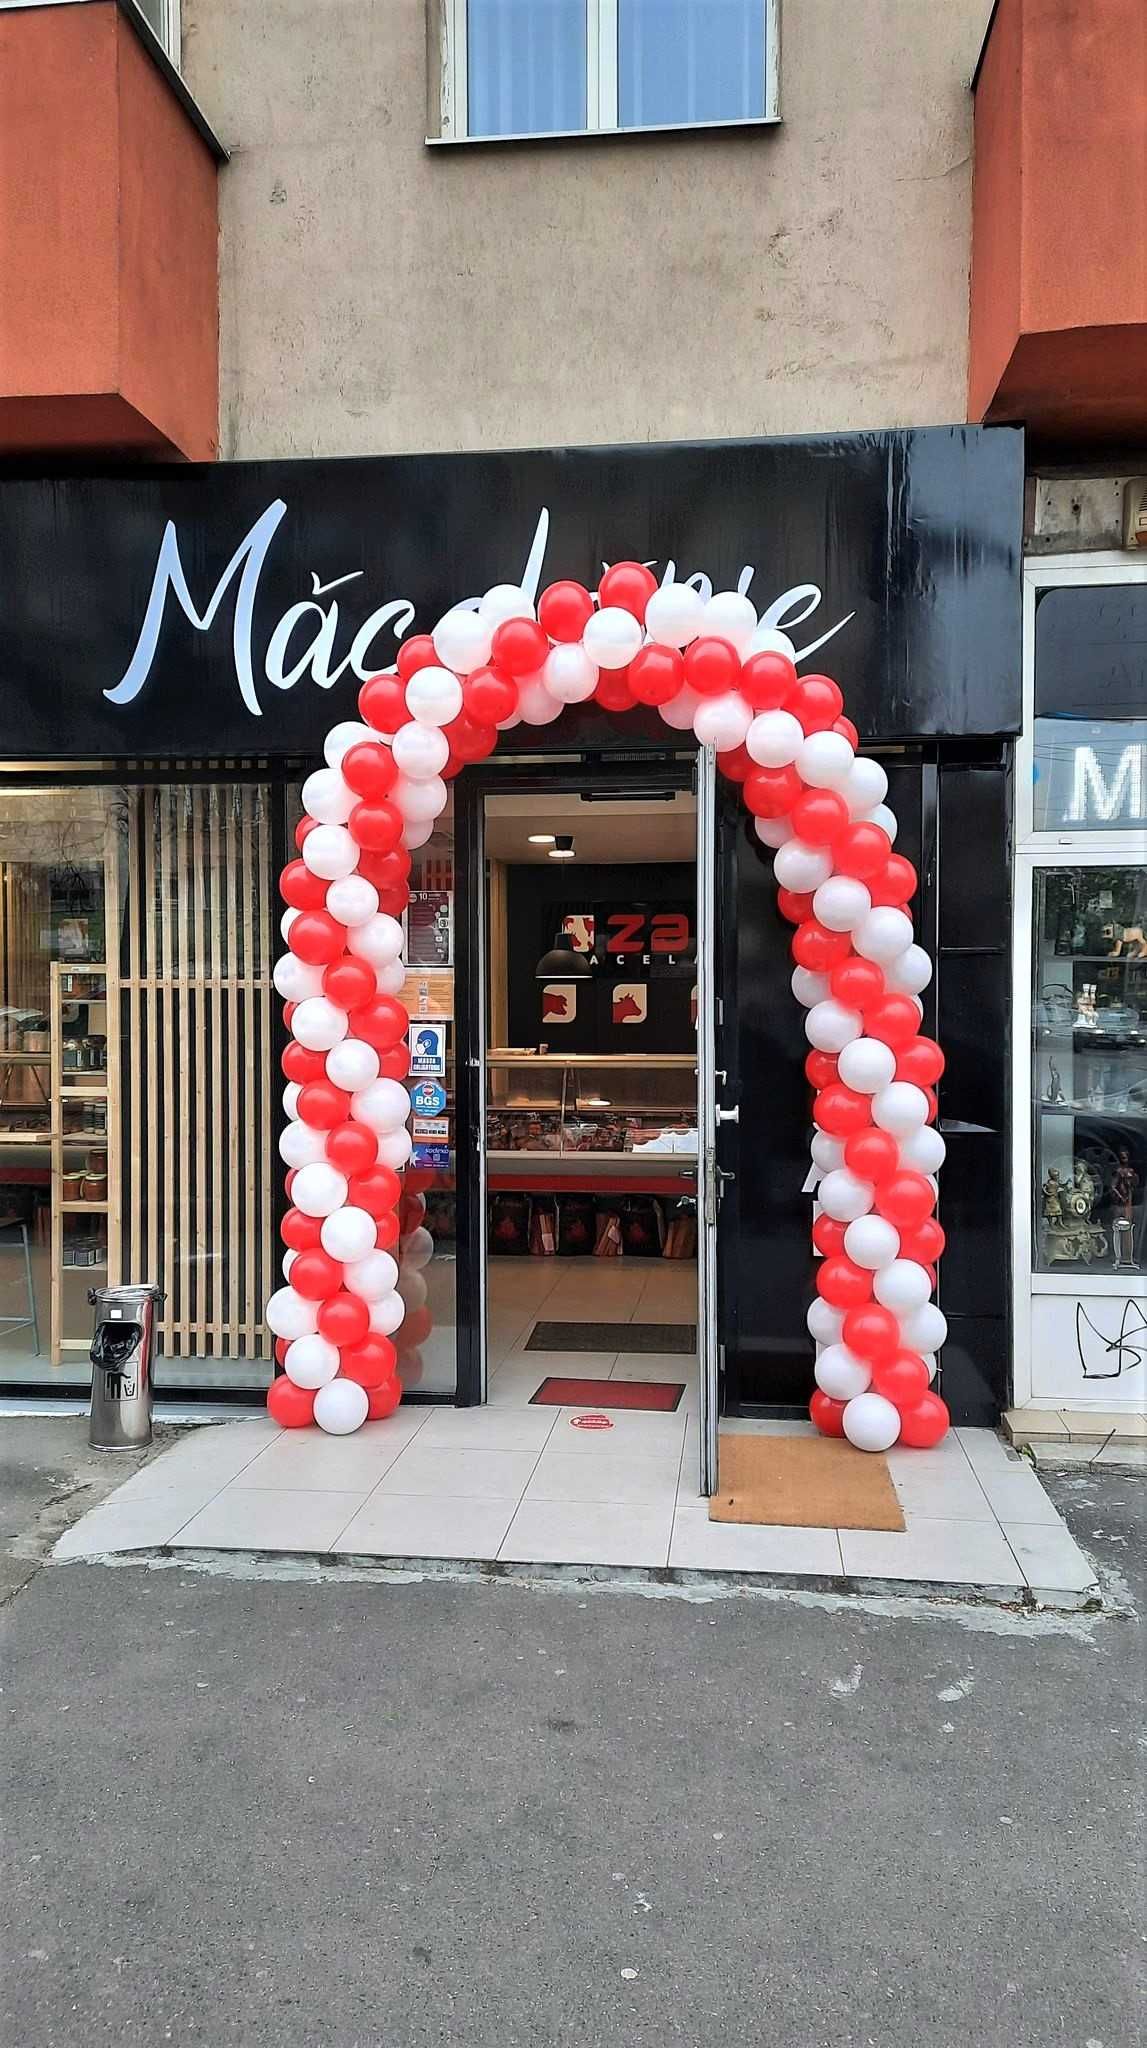 Arcade din Baloane deschideri magazin,diferite evenimente